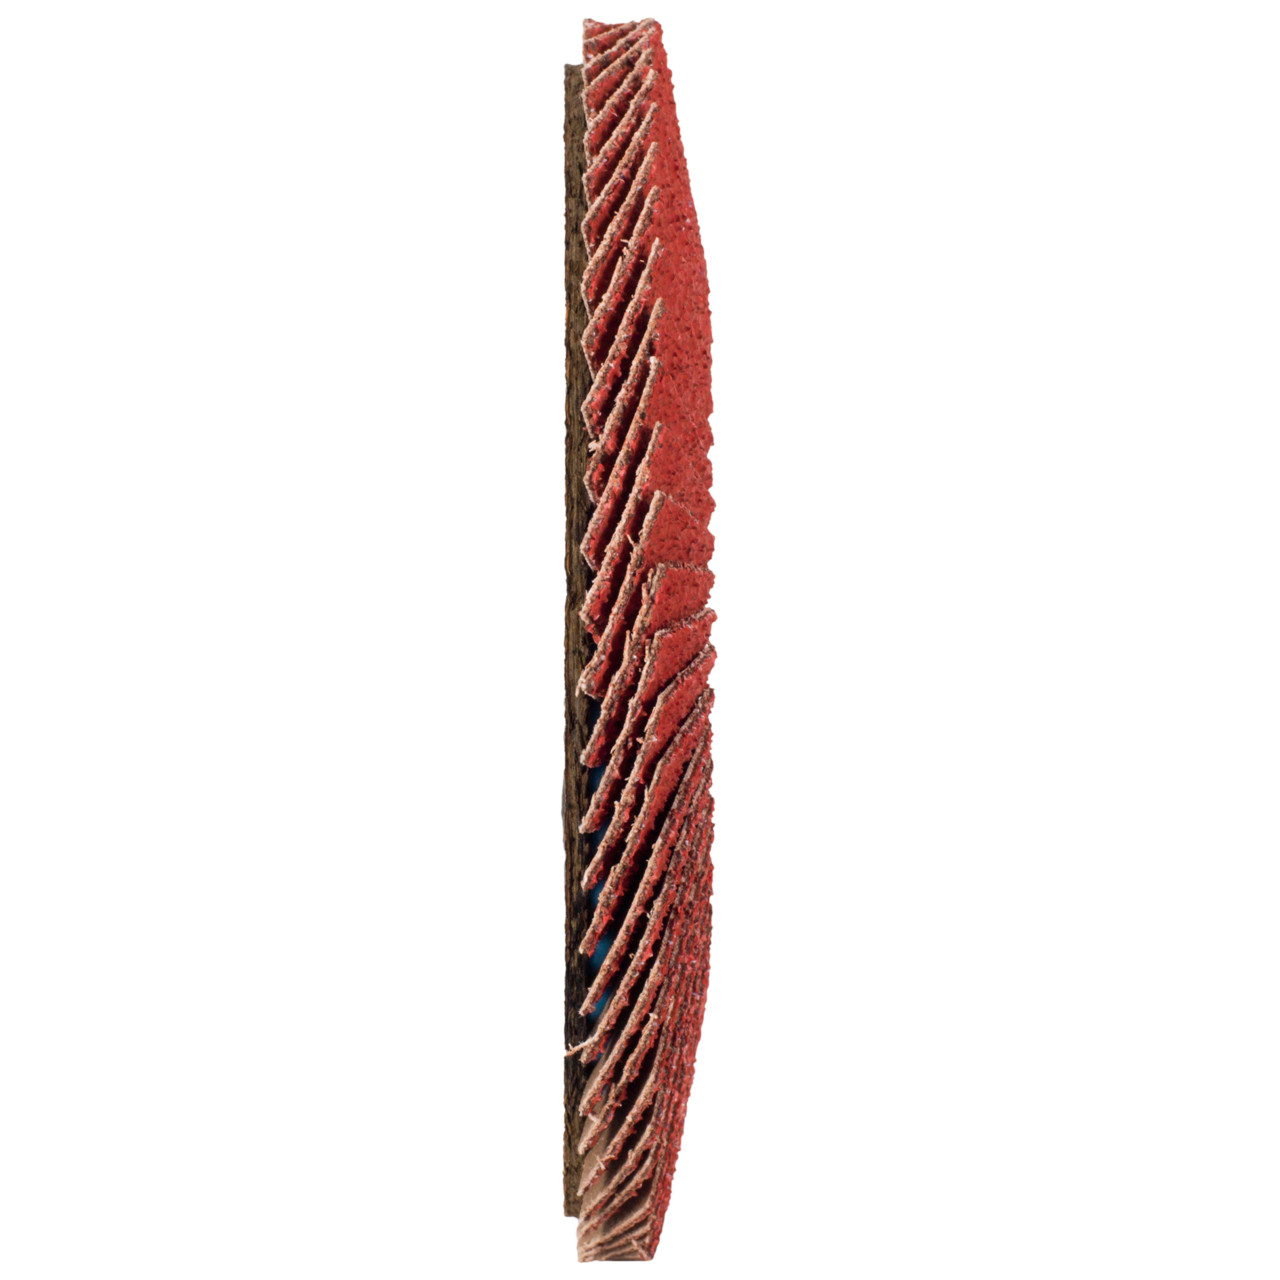 Tyrolit Gekartelde borgring DxH 125x22,23 CERABOND gekartelde borgring voor roestvrij staal, P60, vorm: 27A - offset uitvoering (glasvezeldrager body versie), Art. 34043517